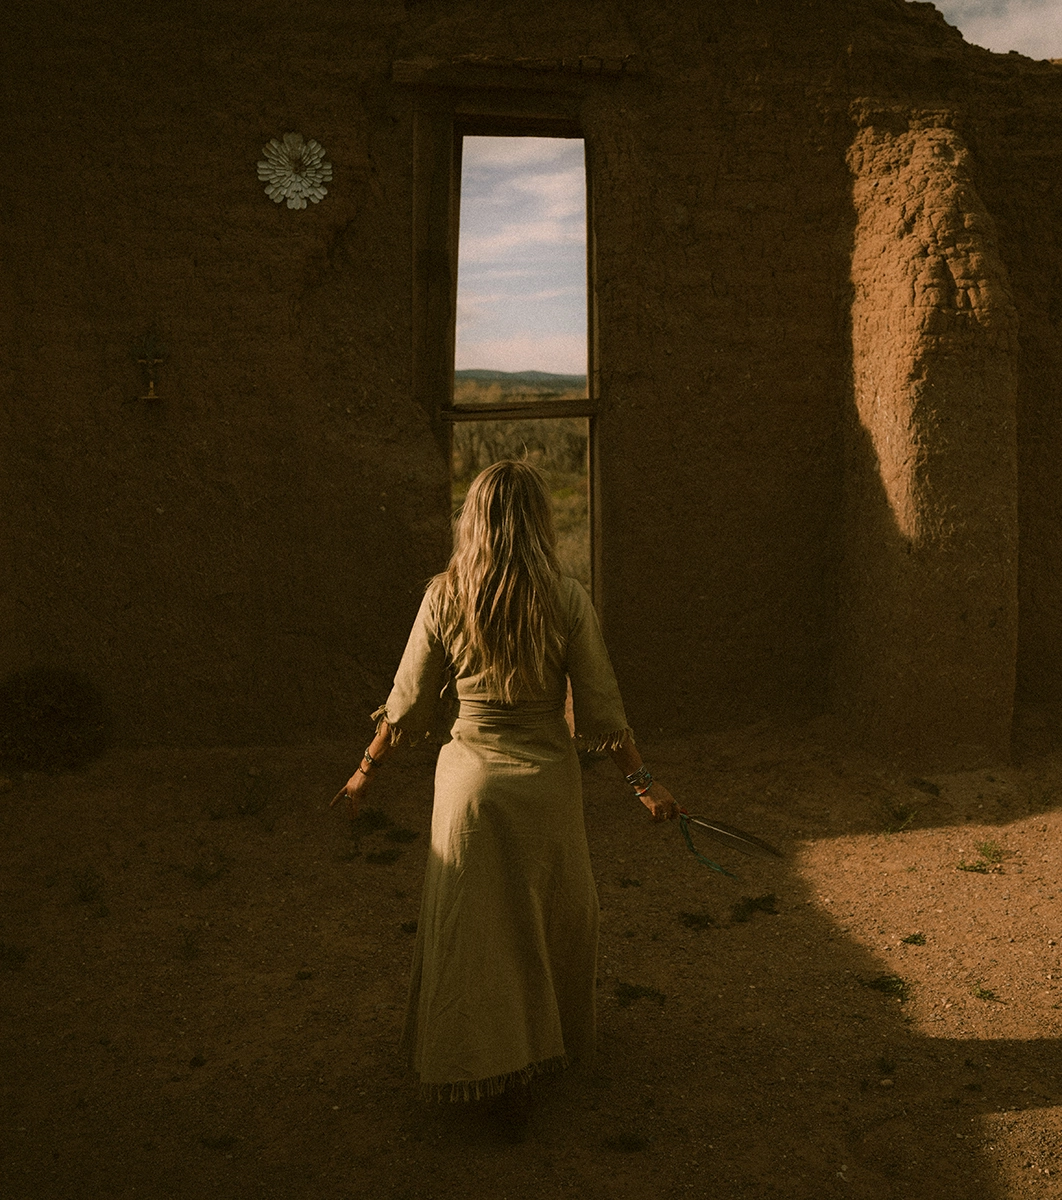 Woman walks to a mysterious door in the desert